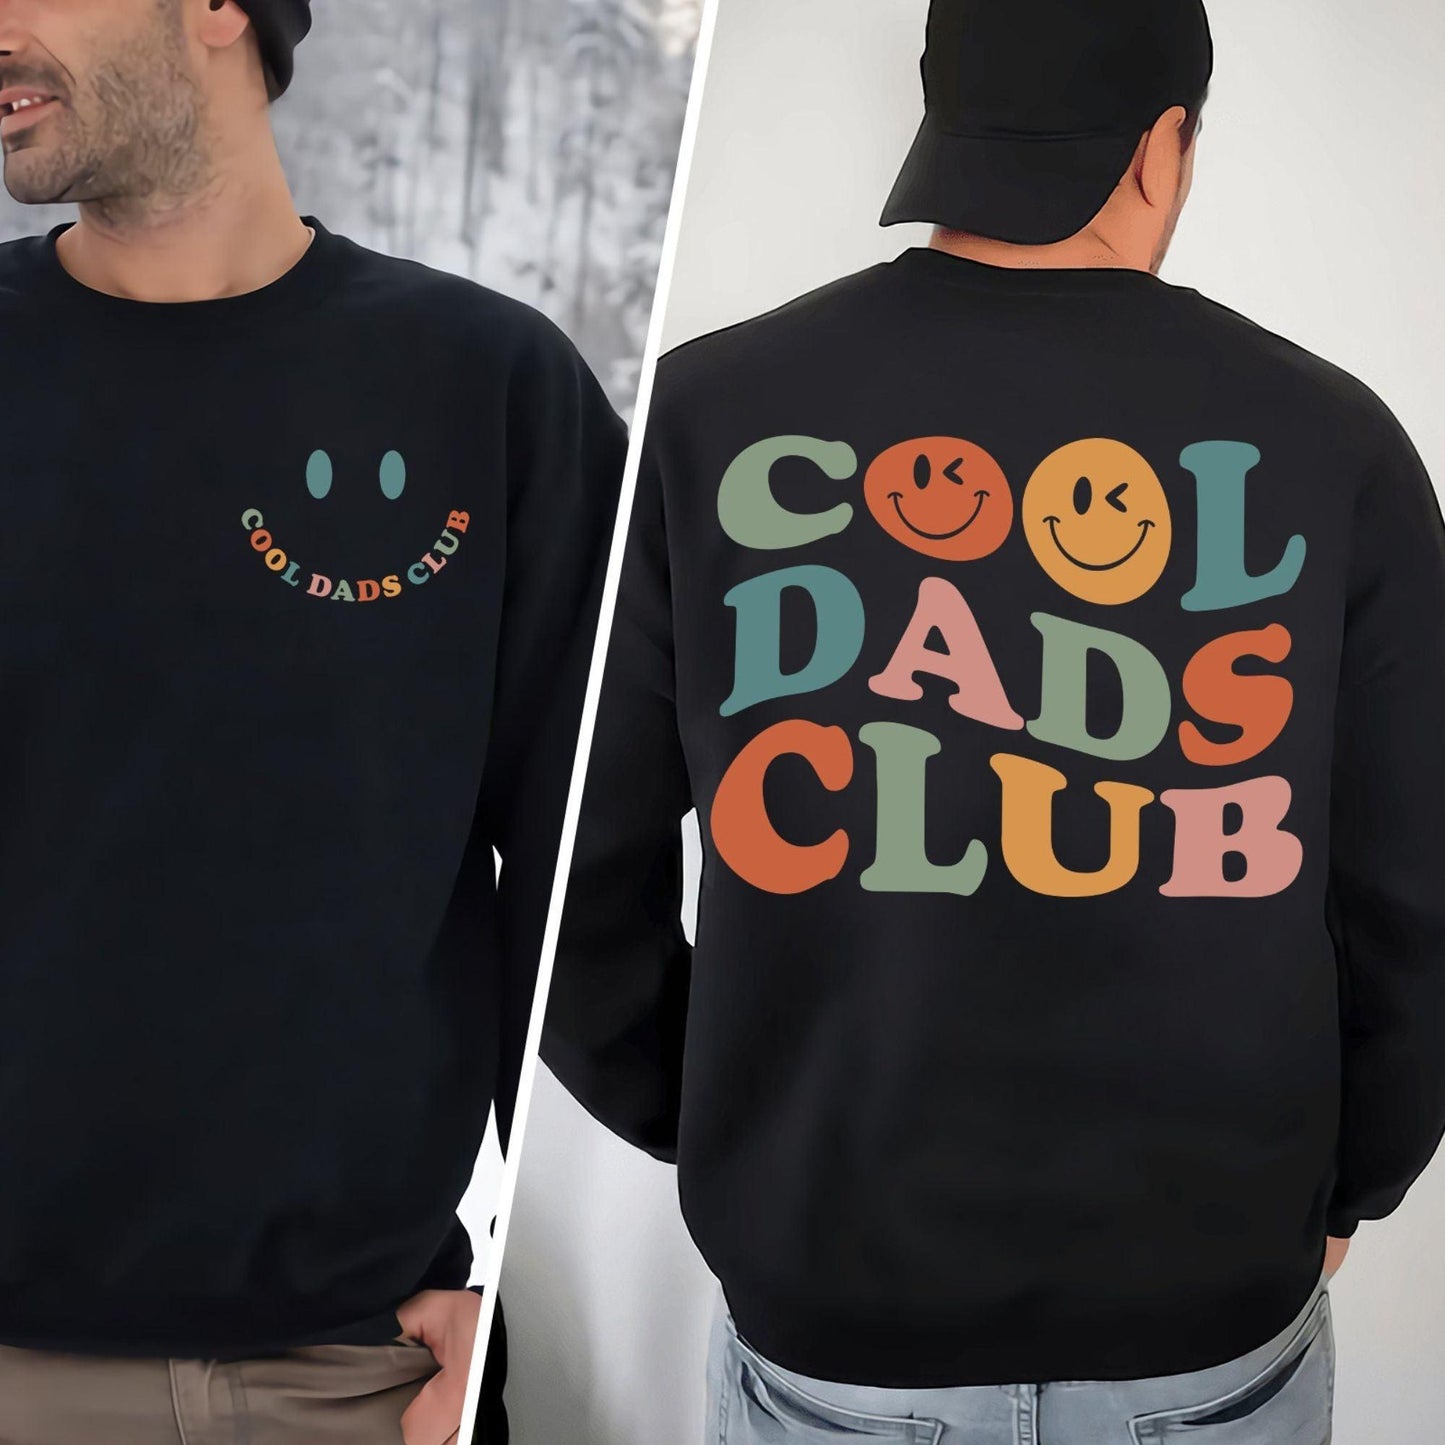 Cooles Dads Club-Sweatshirt, Cooles Dads Club-Shirt, Cooles Papa-Geschenk, Papa-Geschen - GiftHaus